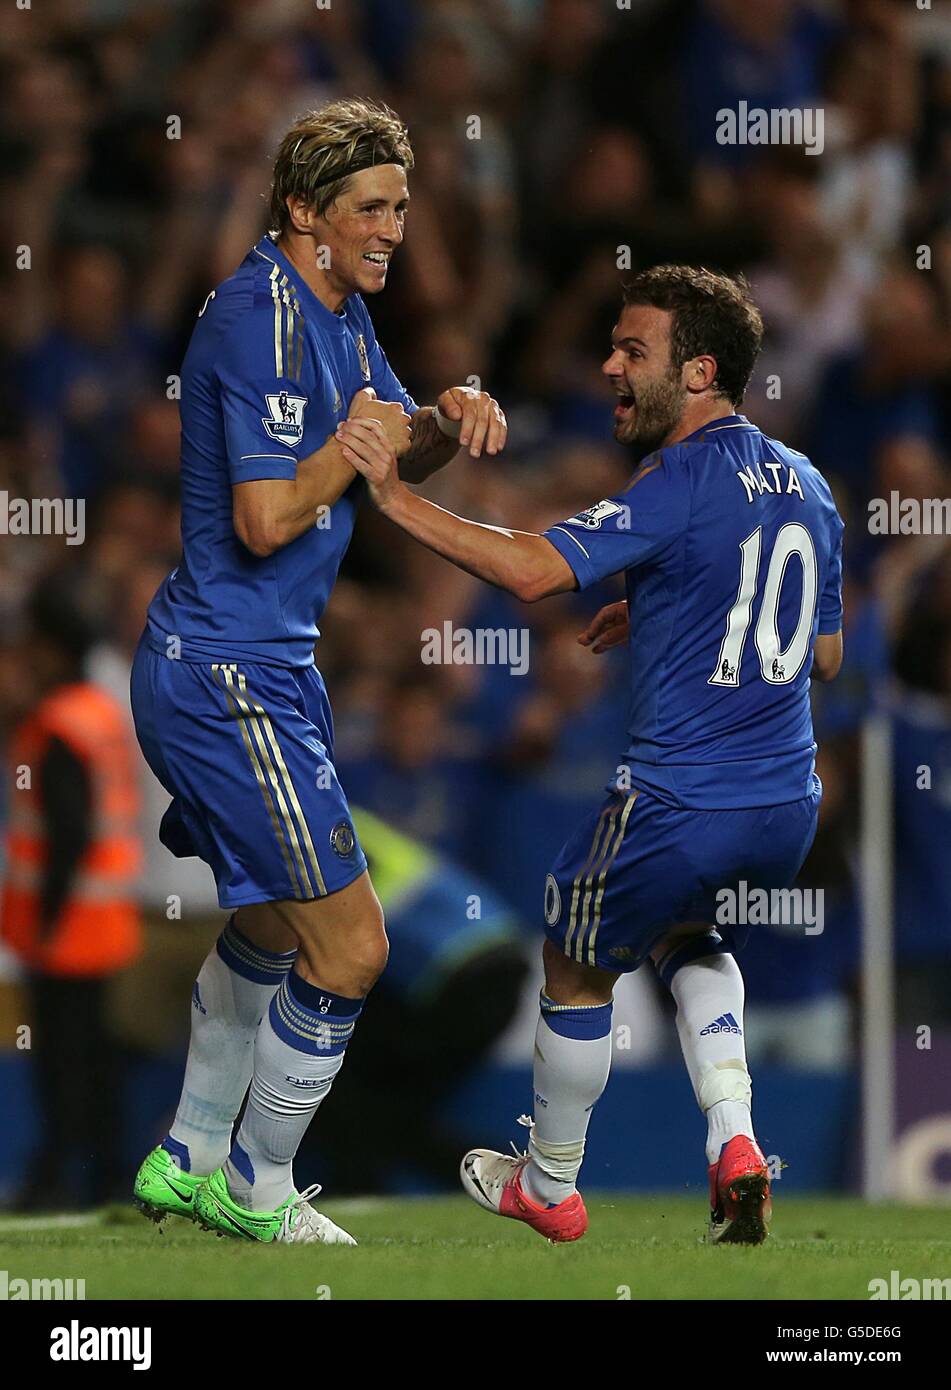 Chelsea's Fernando Torres celebrates scoring their third goal of the game with team-mate Juan Mata (right) Stock Photo